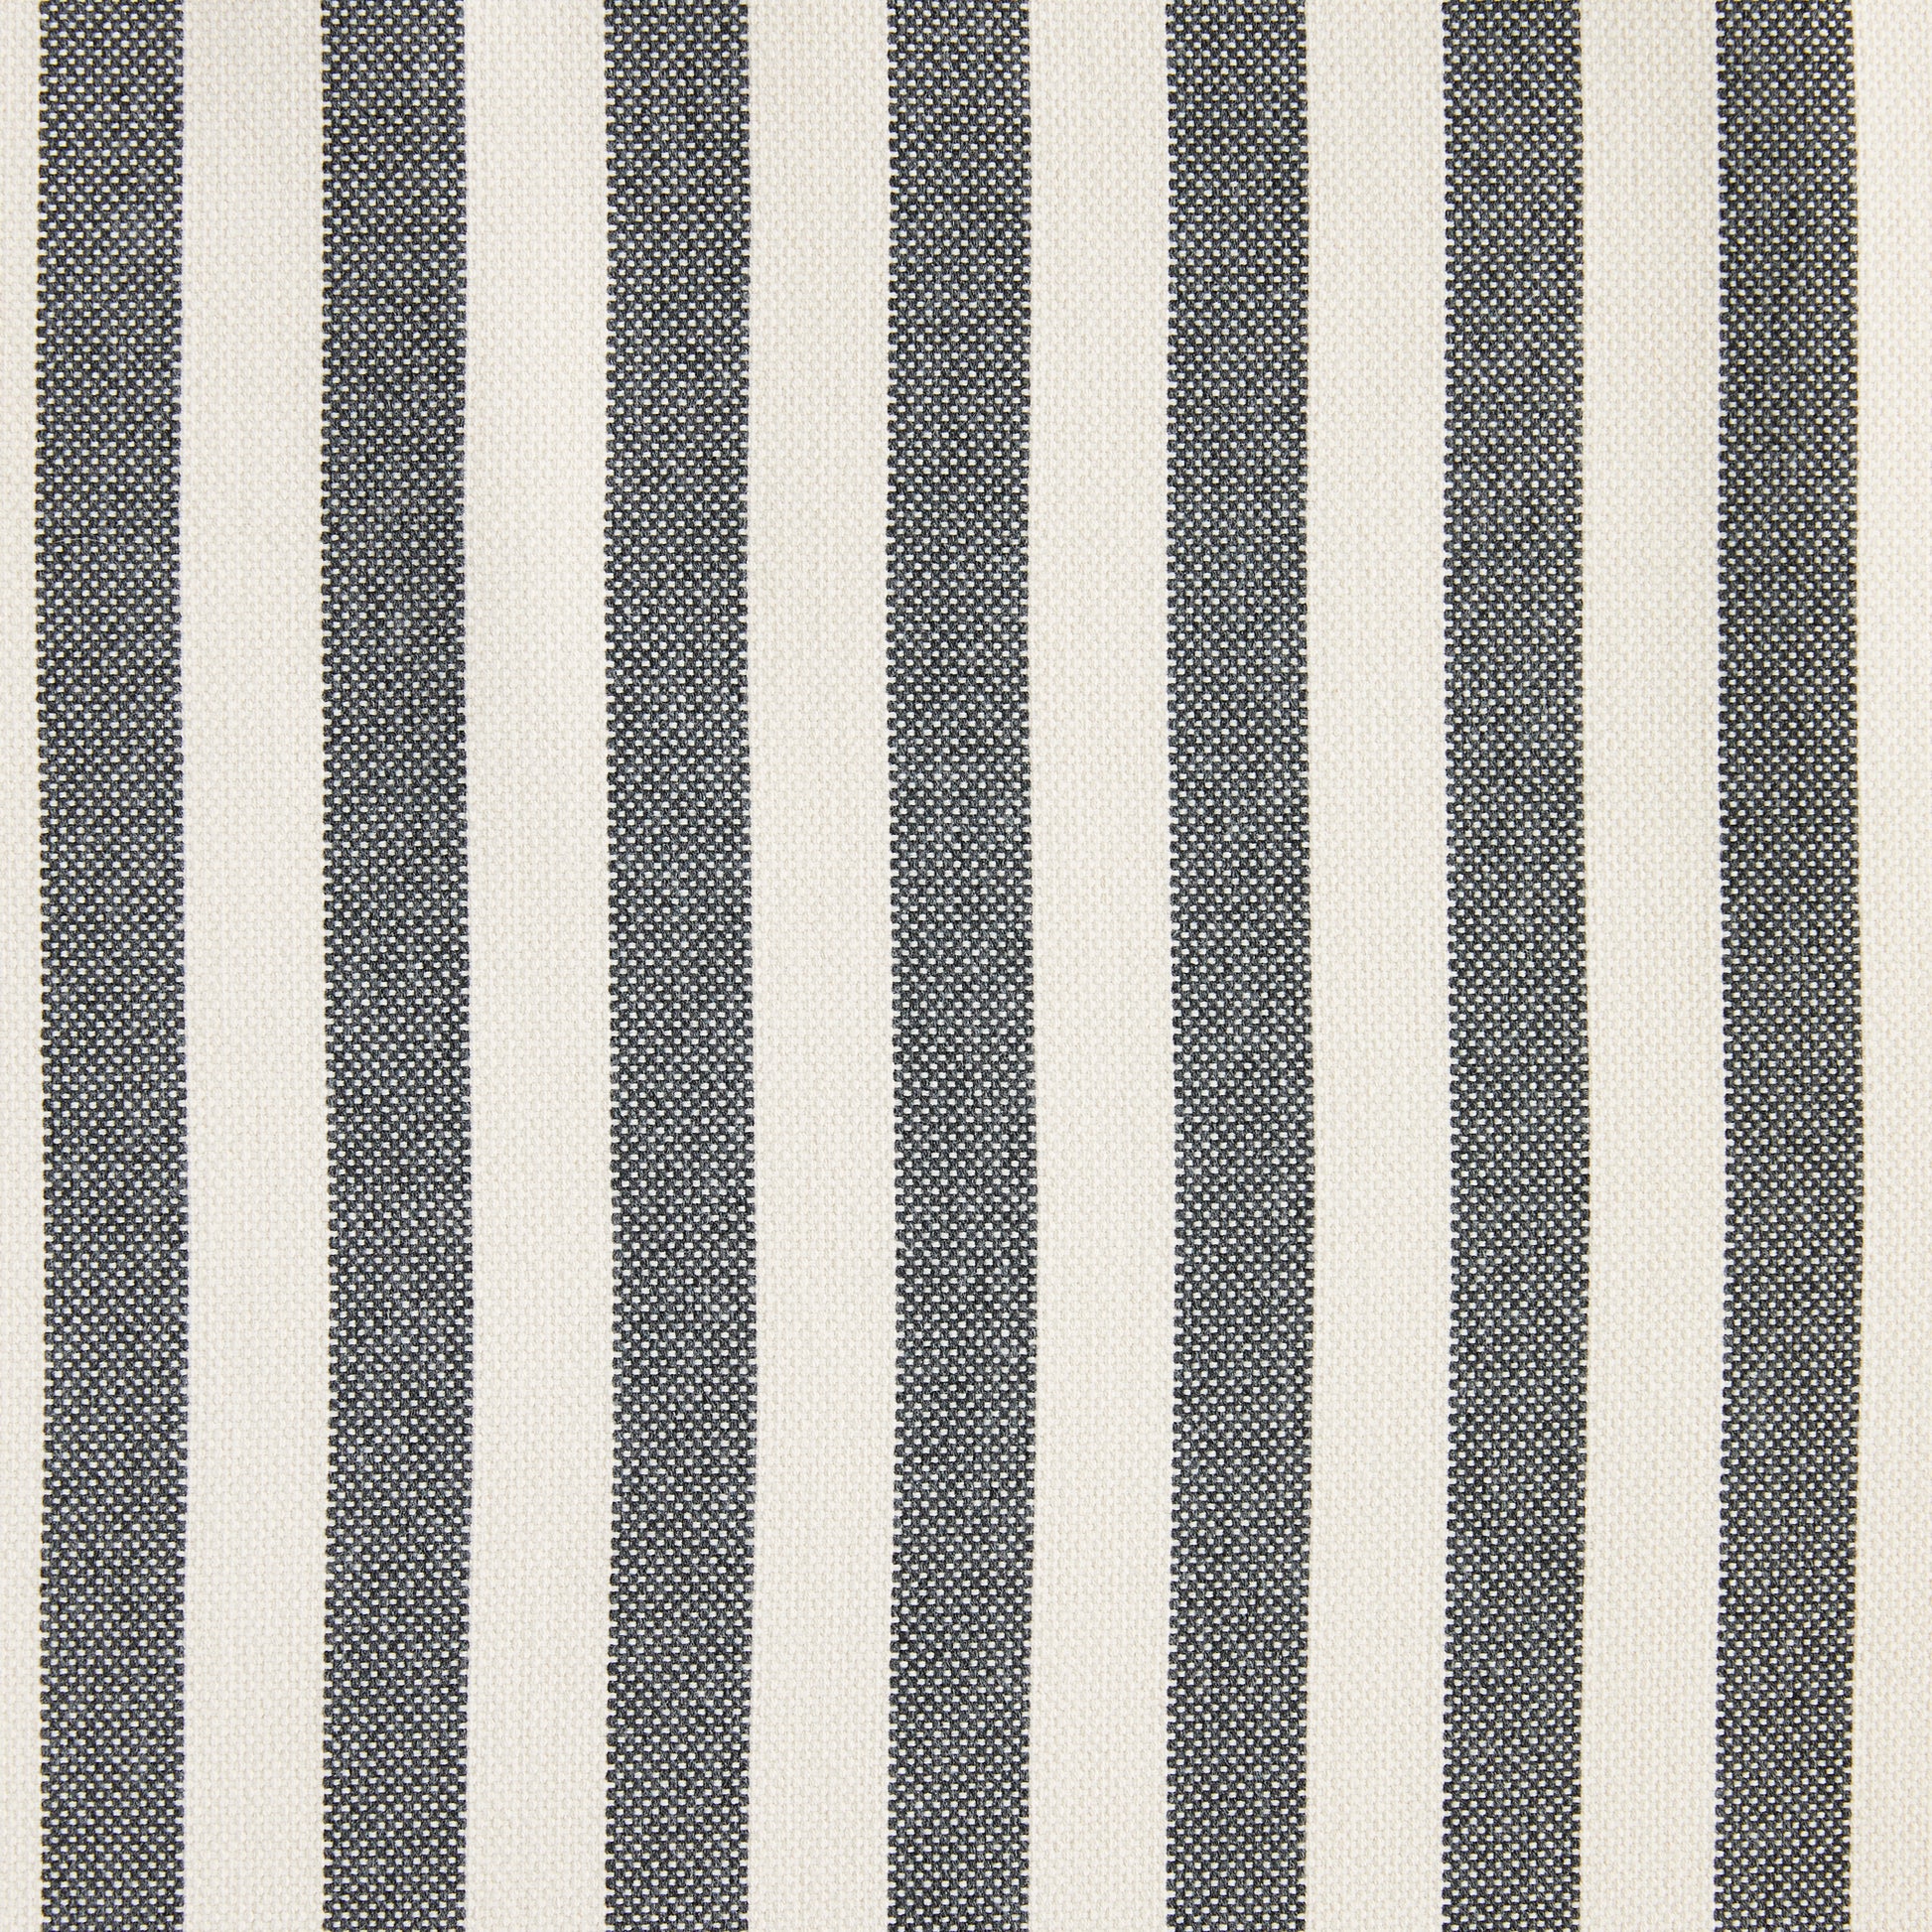 Purchase 83840 | Even Stripe, Charcoal - Schumacher Fabric